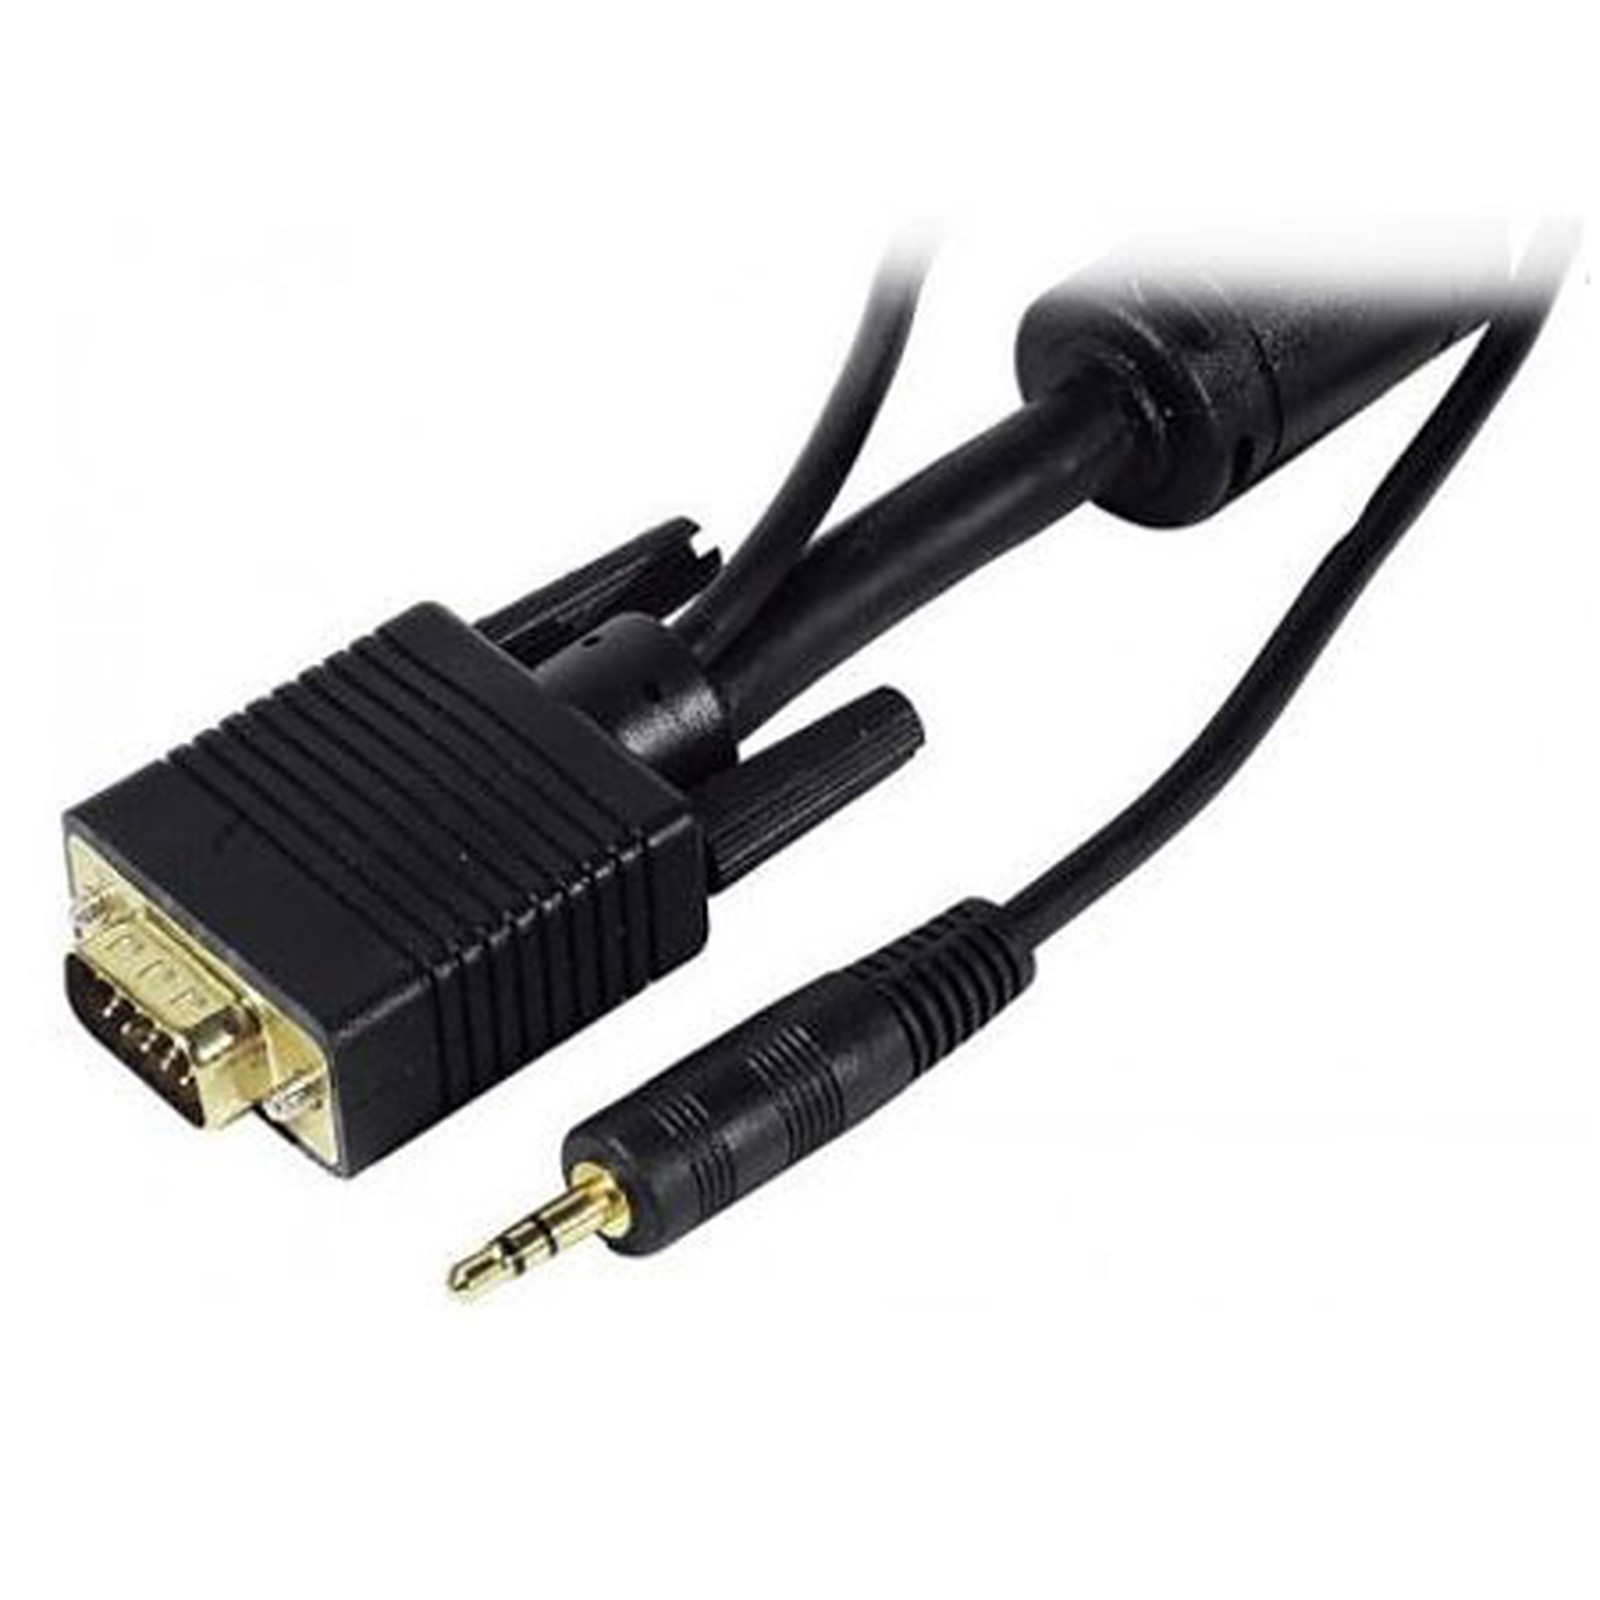 Cable VGA + Jack male / male (3 mètres) - VGA Generique